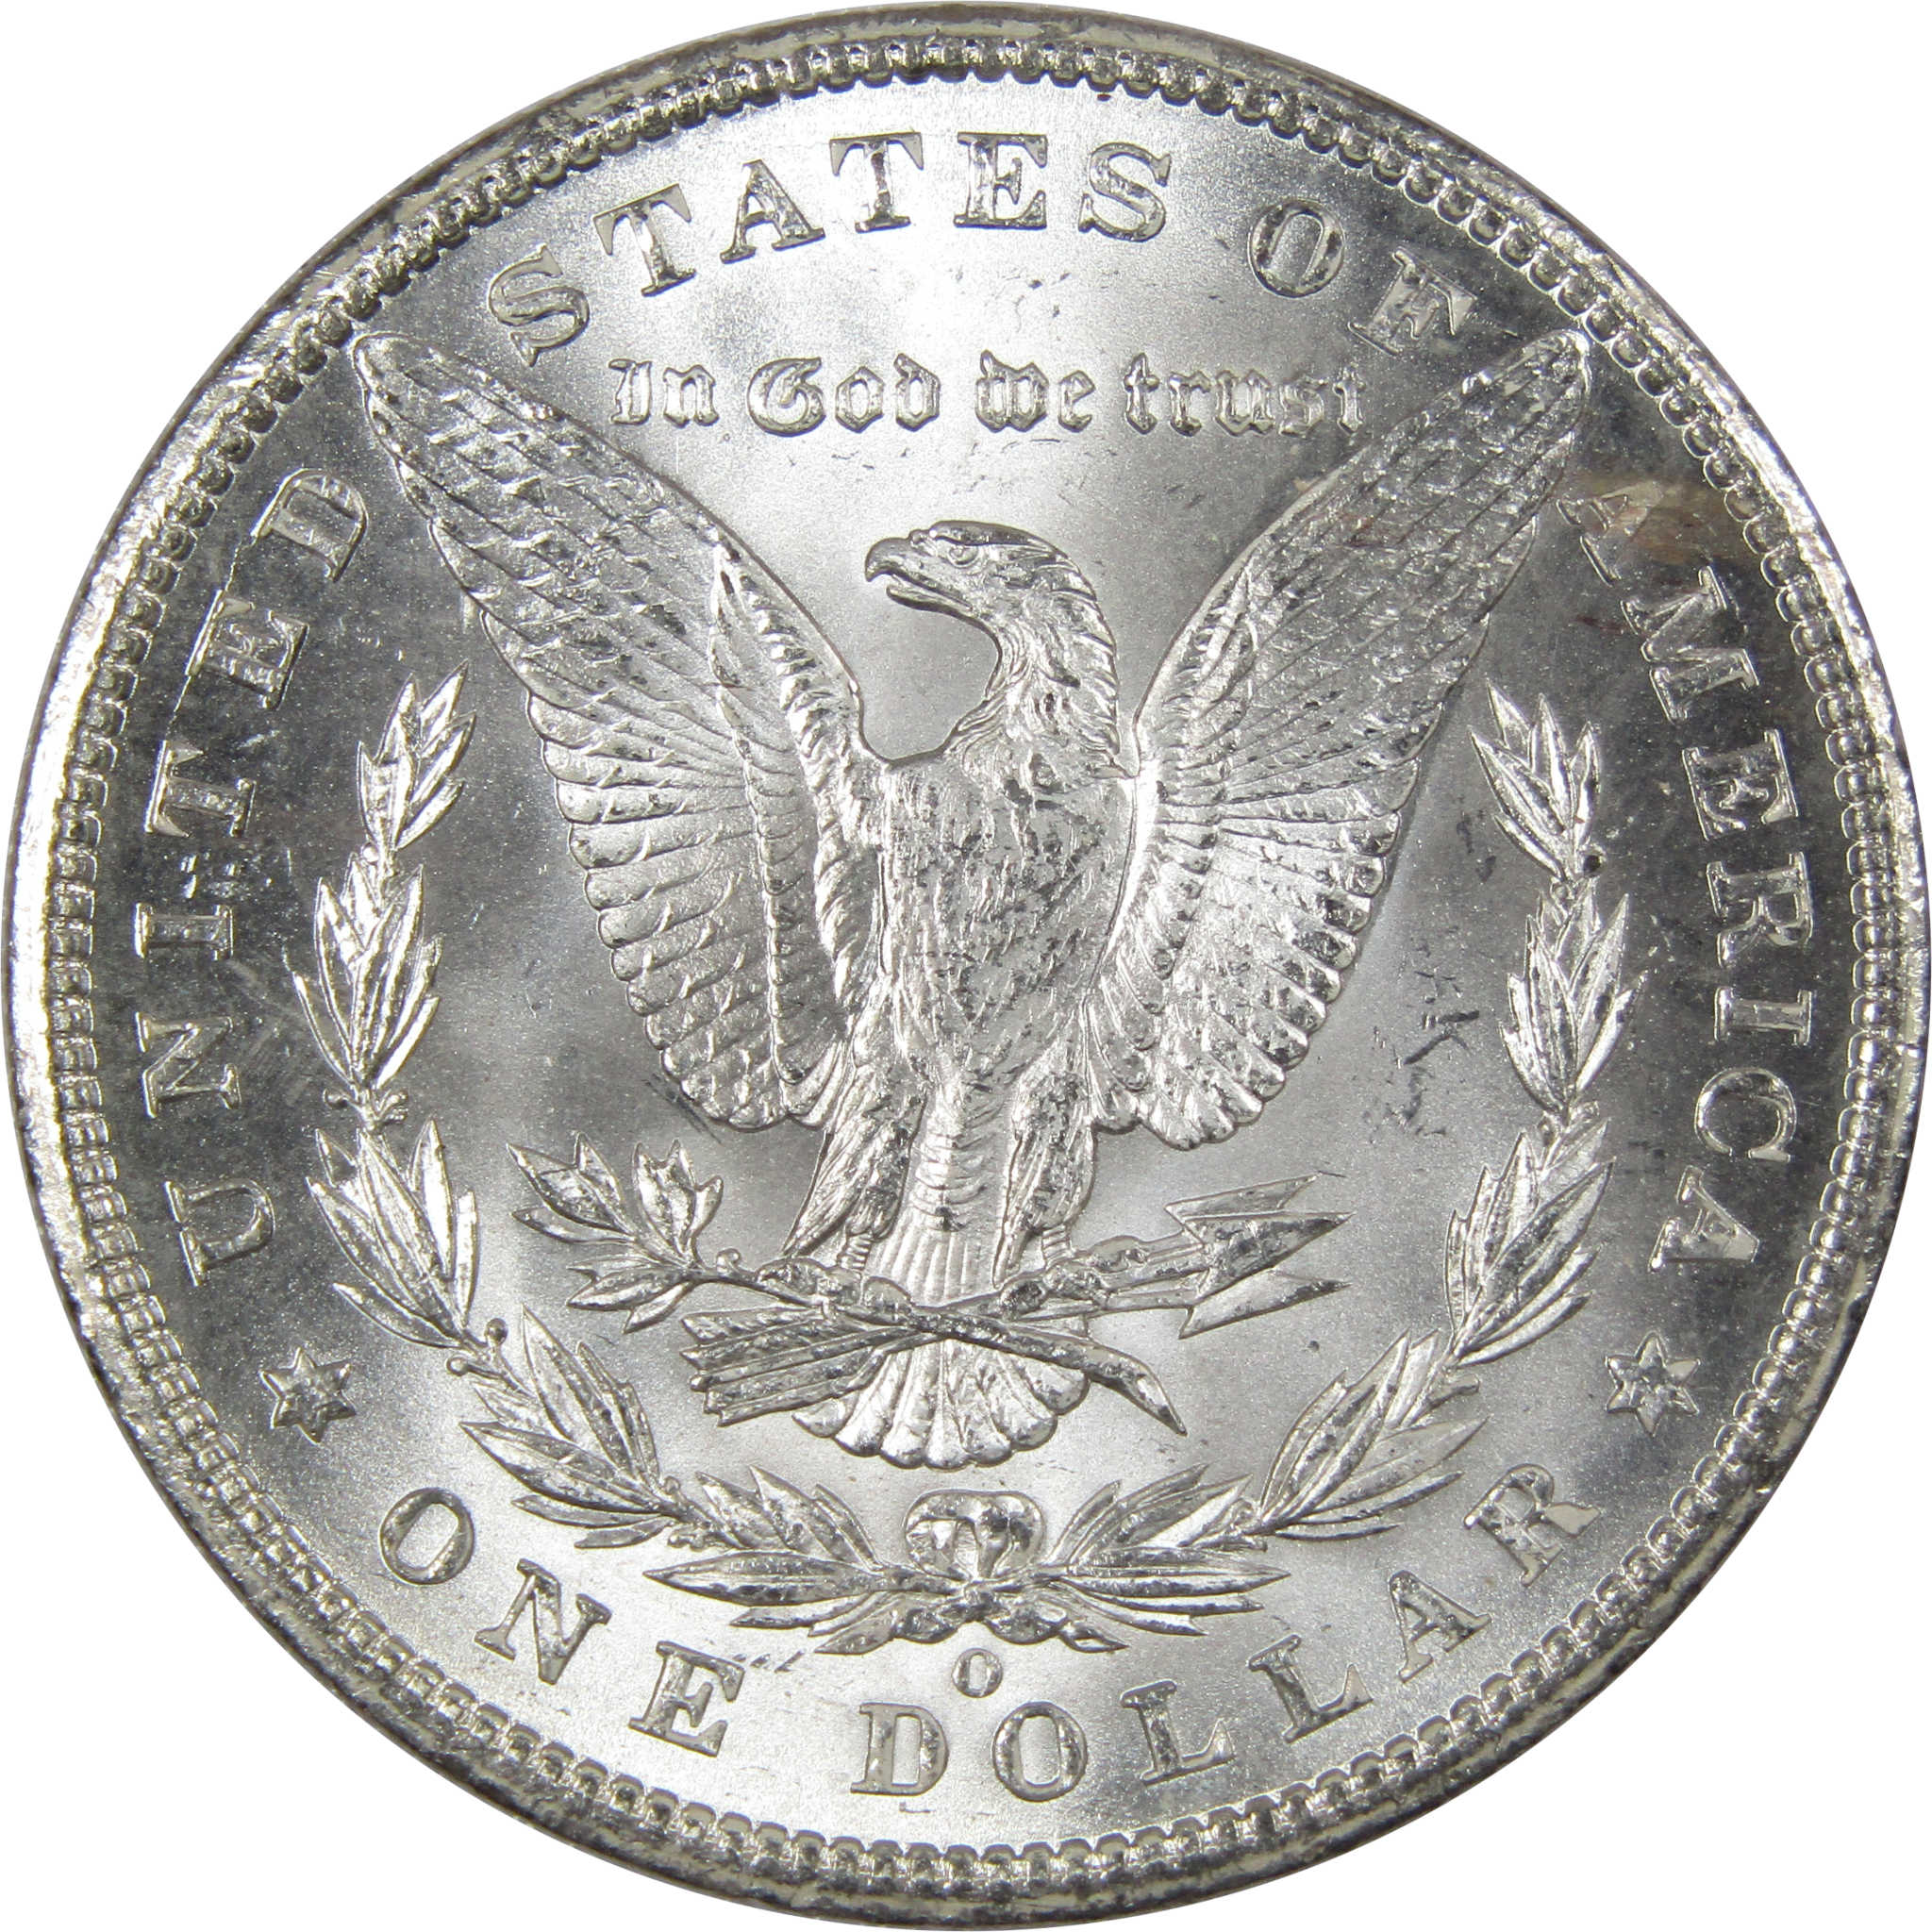 1900 O Morgan Dollar BU Uncirculated Mint State 90% Silver SKU:IPC9762 - Morgan coin - Morgan silver dollar - Morgan silver dollar for sale - Profile Coins &amp; Collectibles